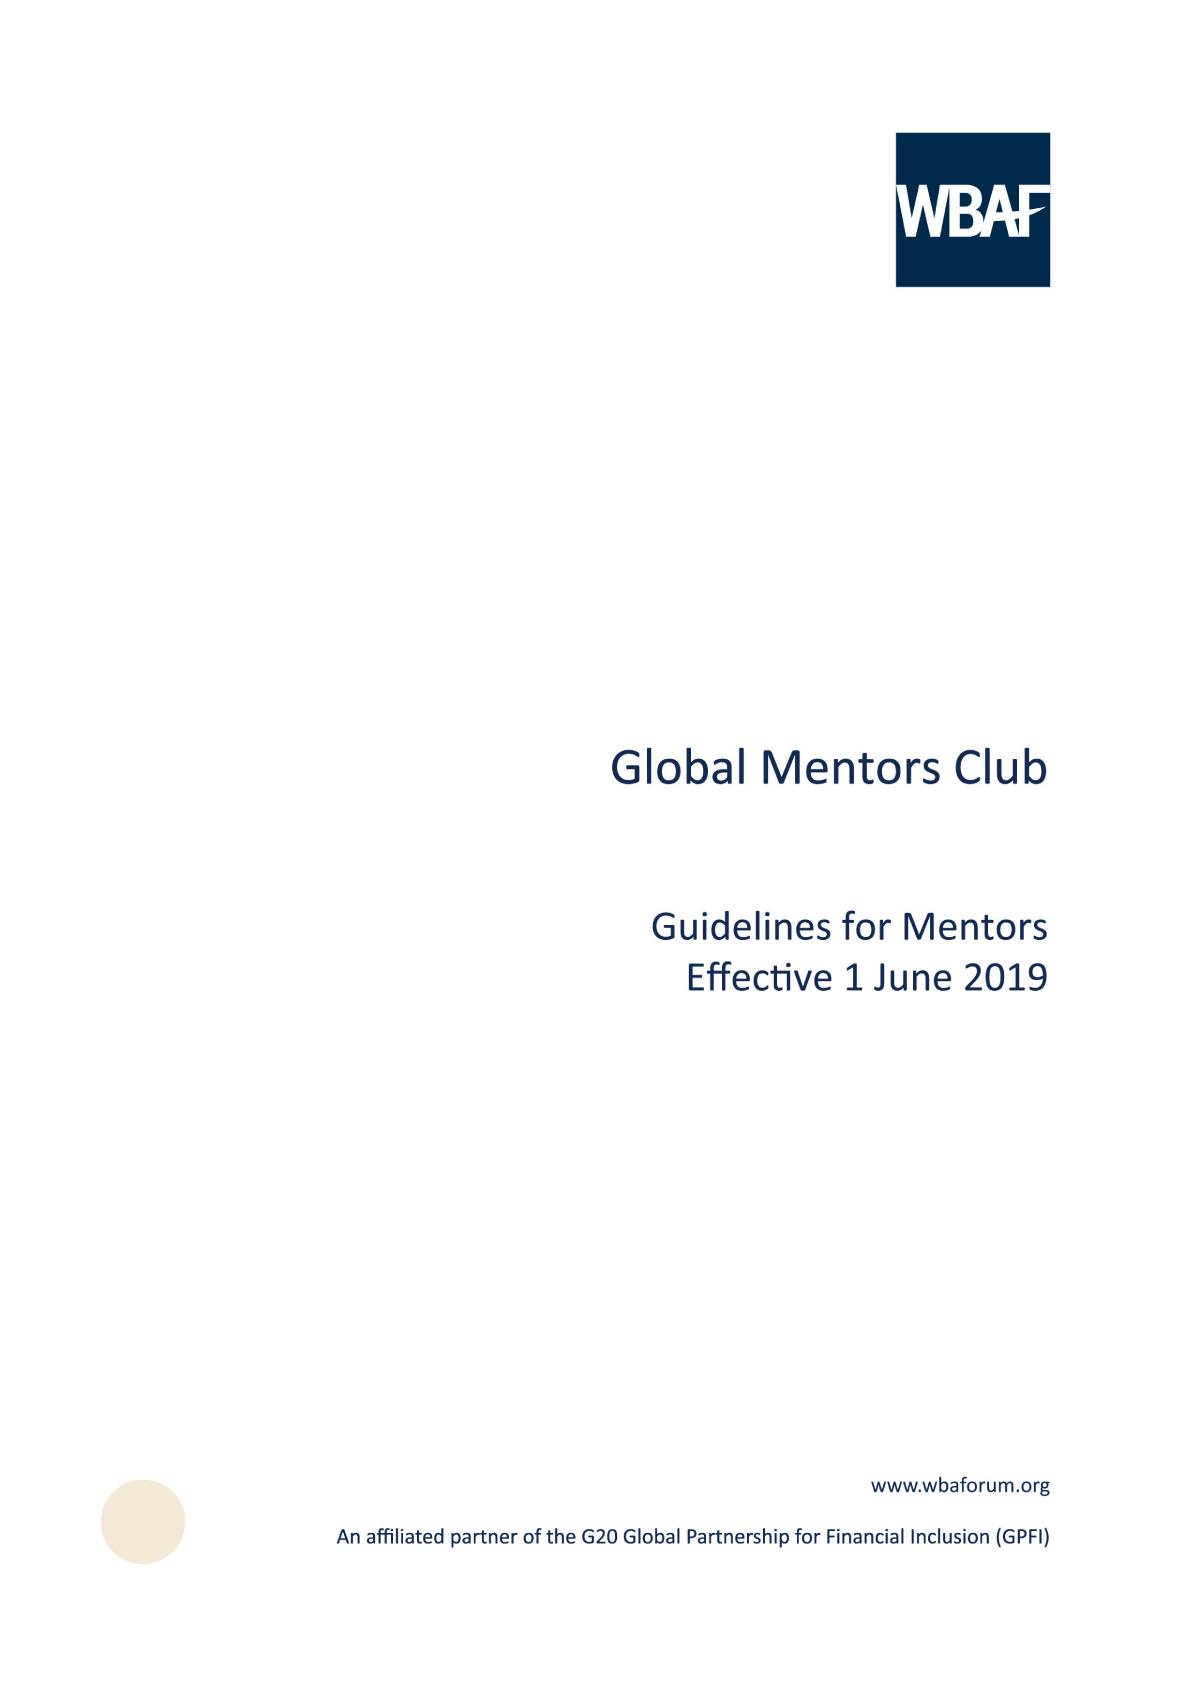 Global Mentors Club - Guidelines for Mentors